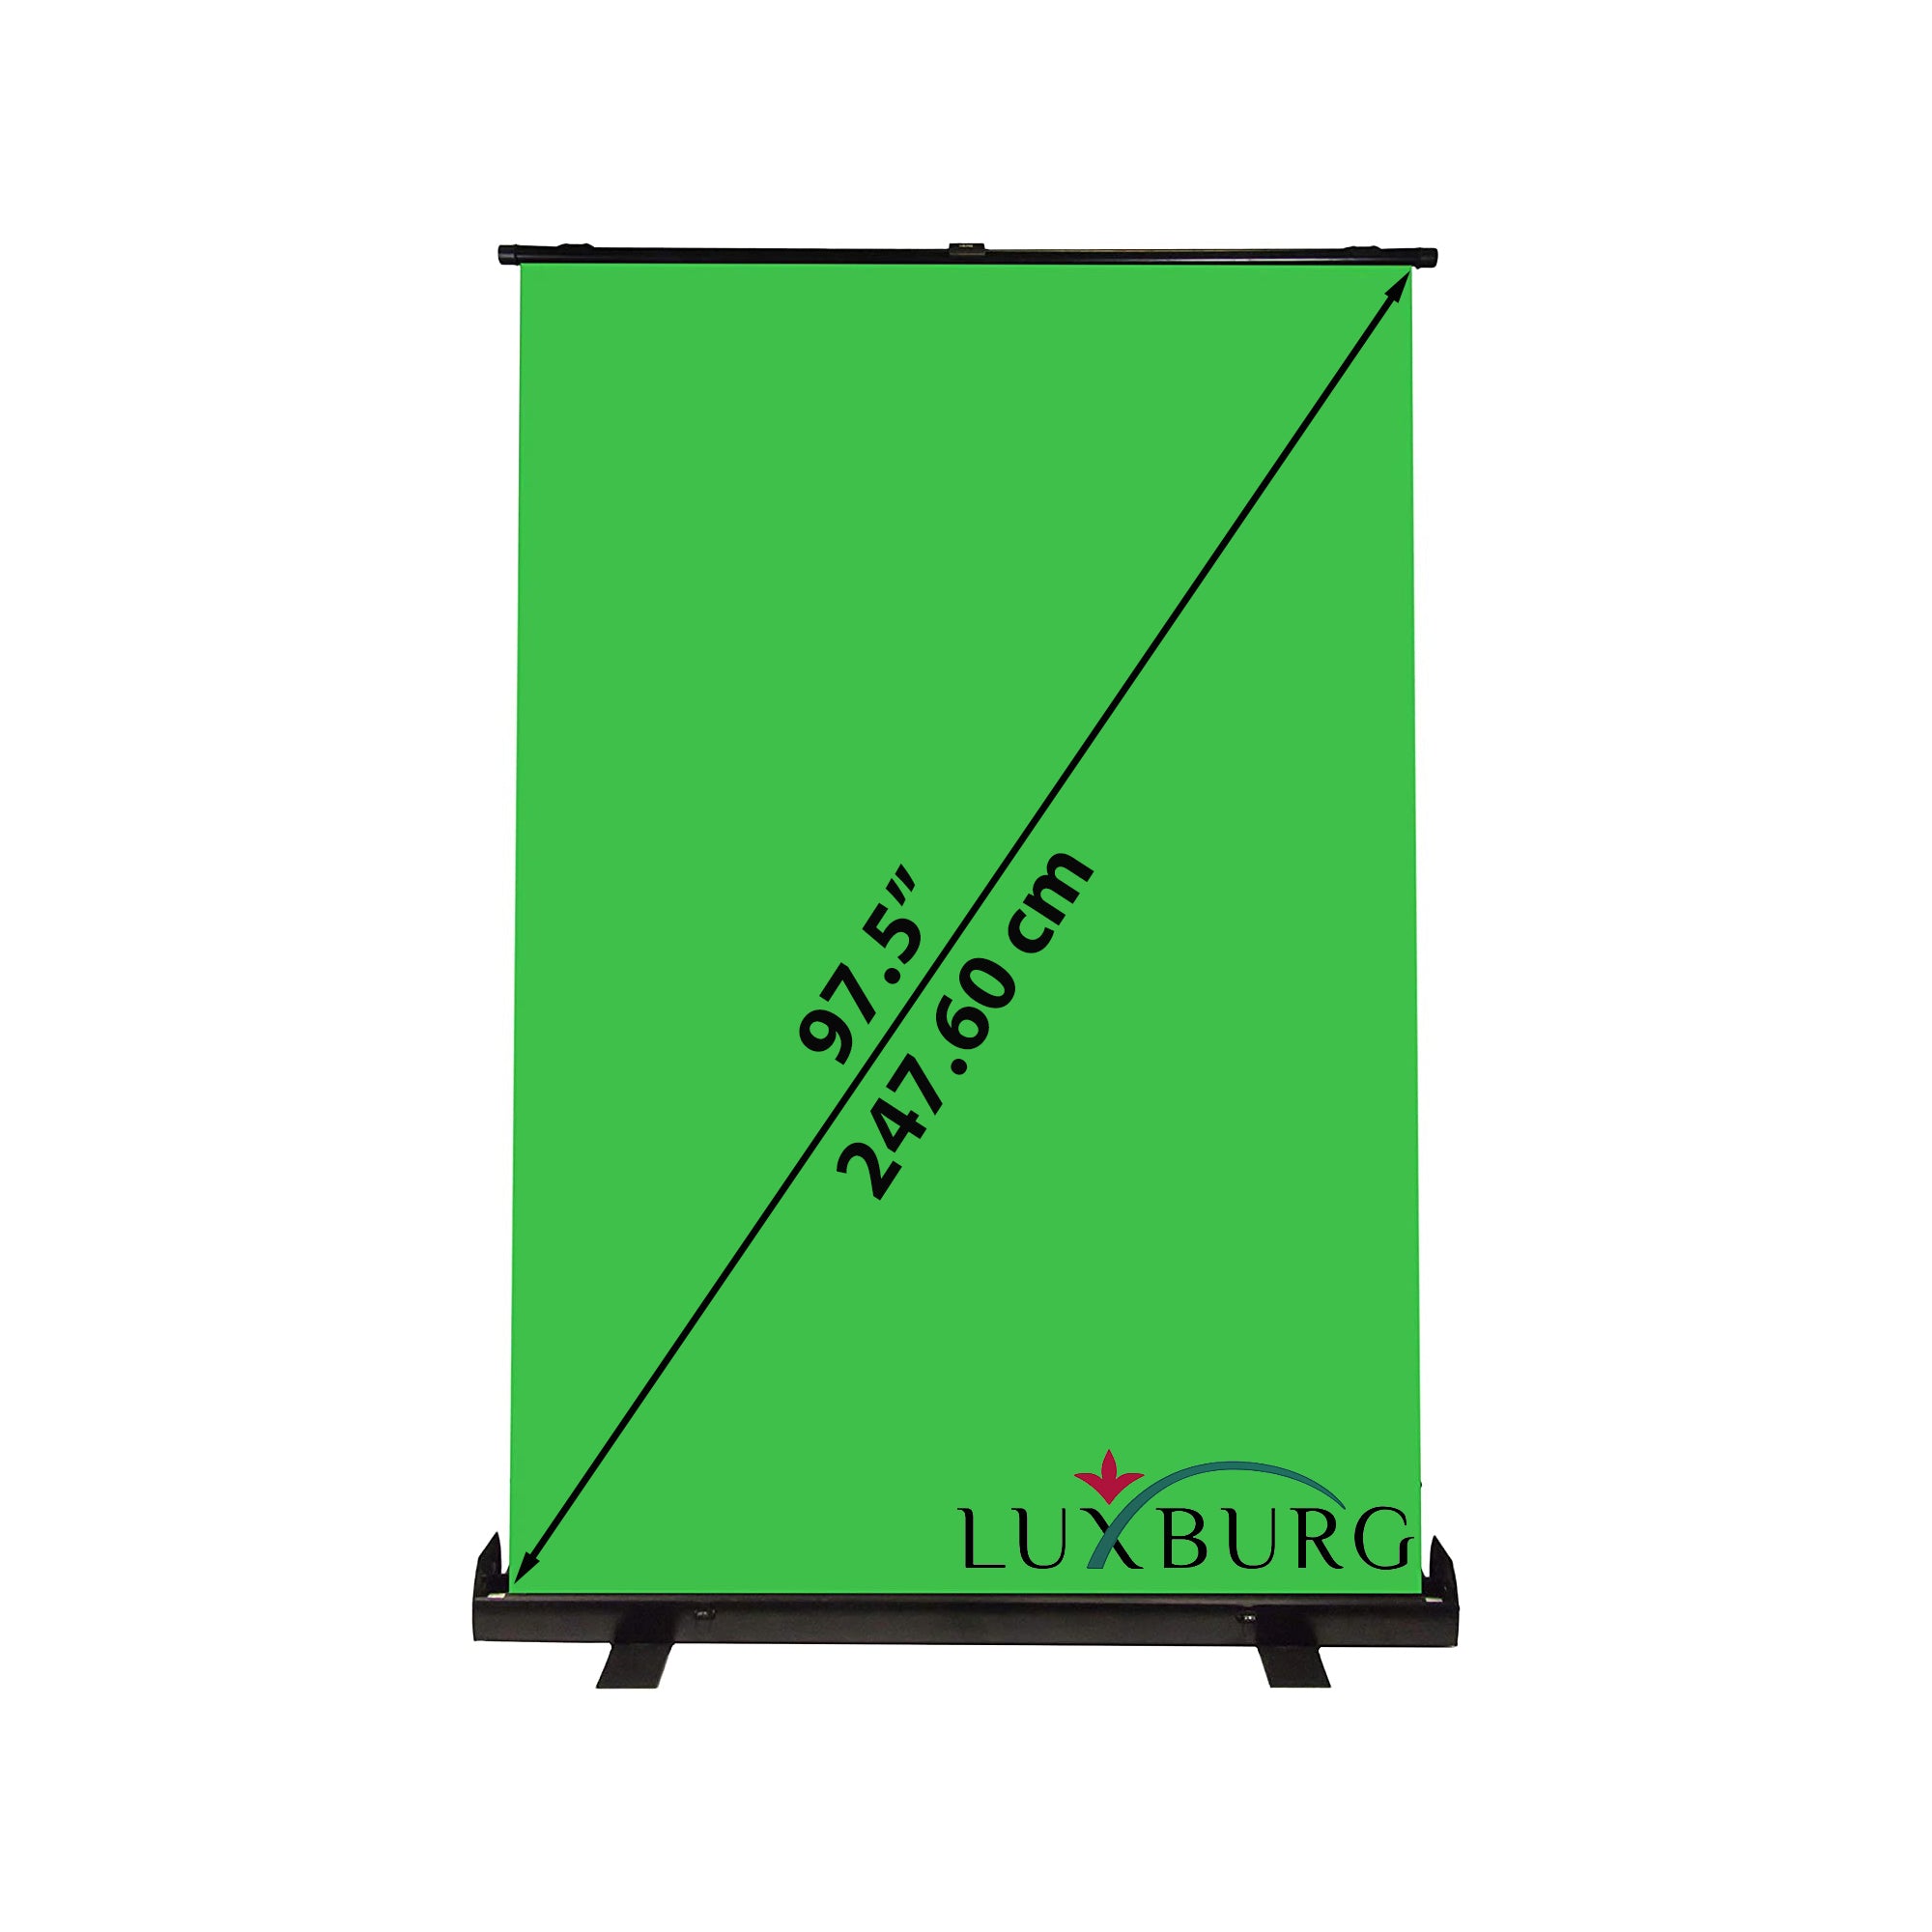 Luxburg 59 / 150cm Tragbare grüne Rückwand Chromakey Hintergrund